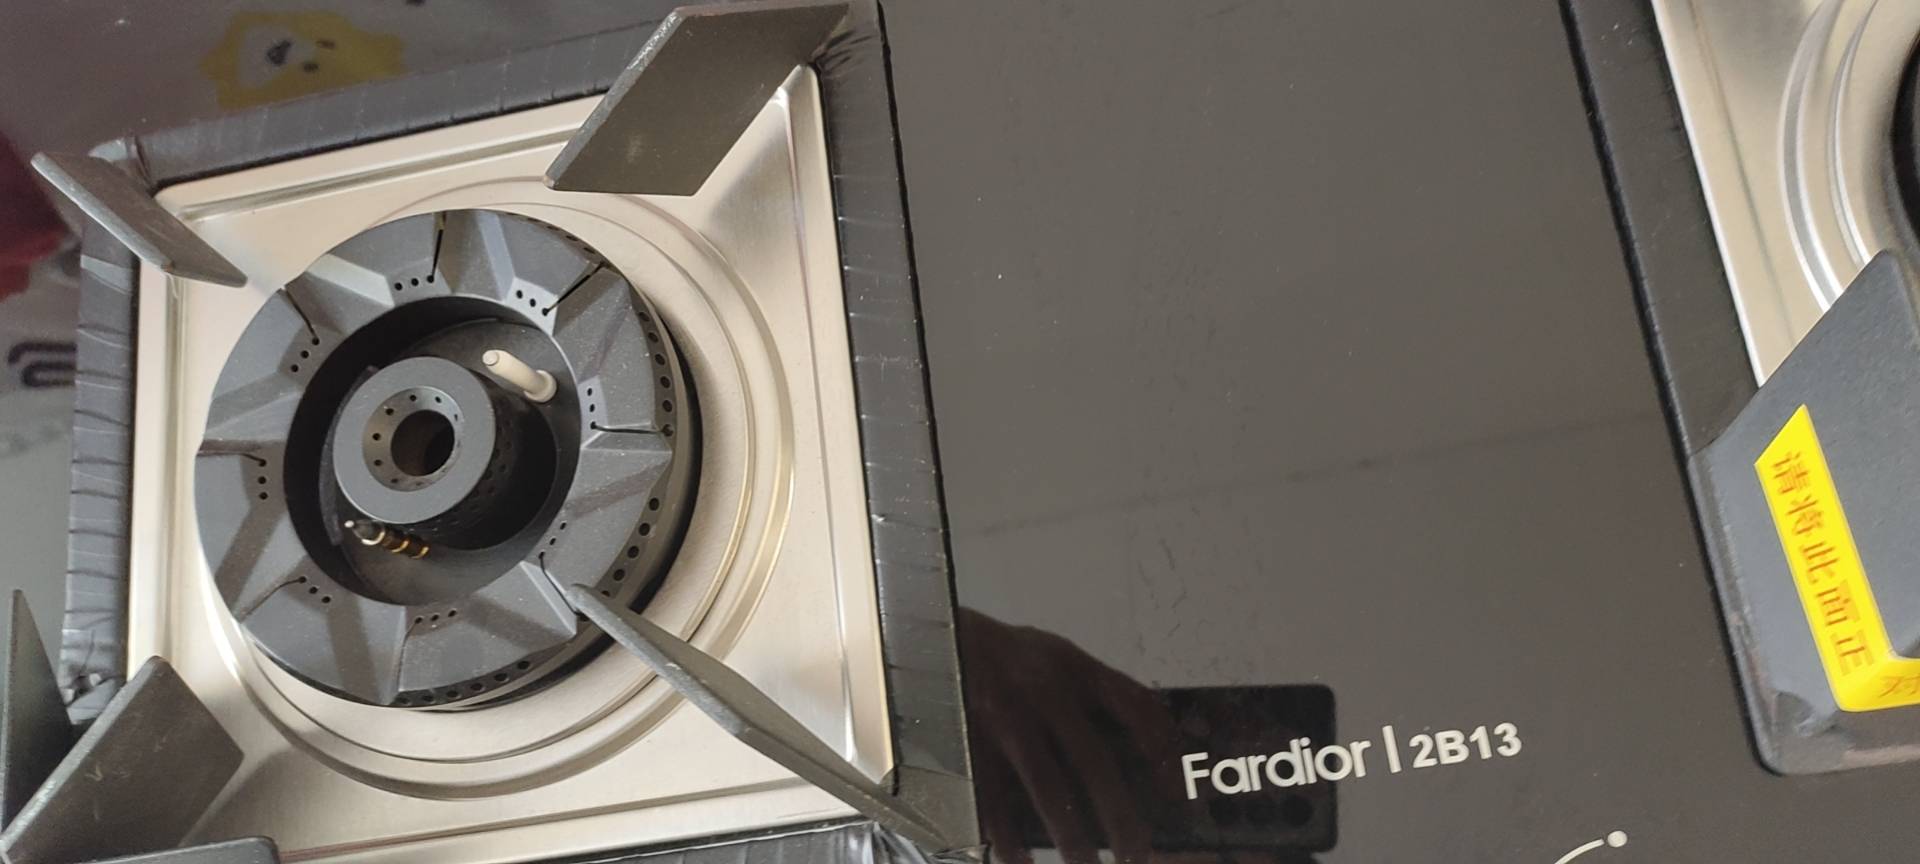 Fardior/法迪欧台嵌两用燃气灶JZT-2B13钢化玻璃面板 天然气 4.2千瓦大火力晒单图